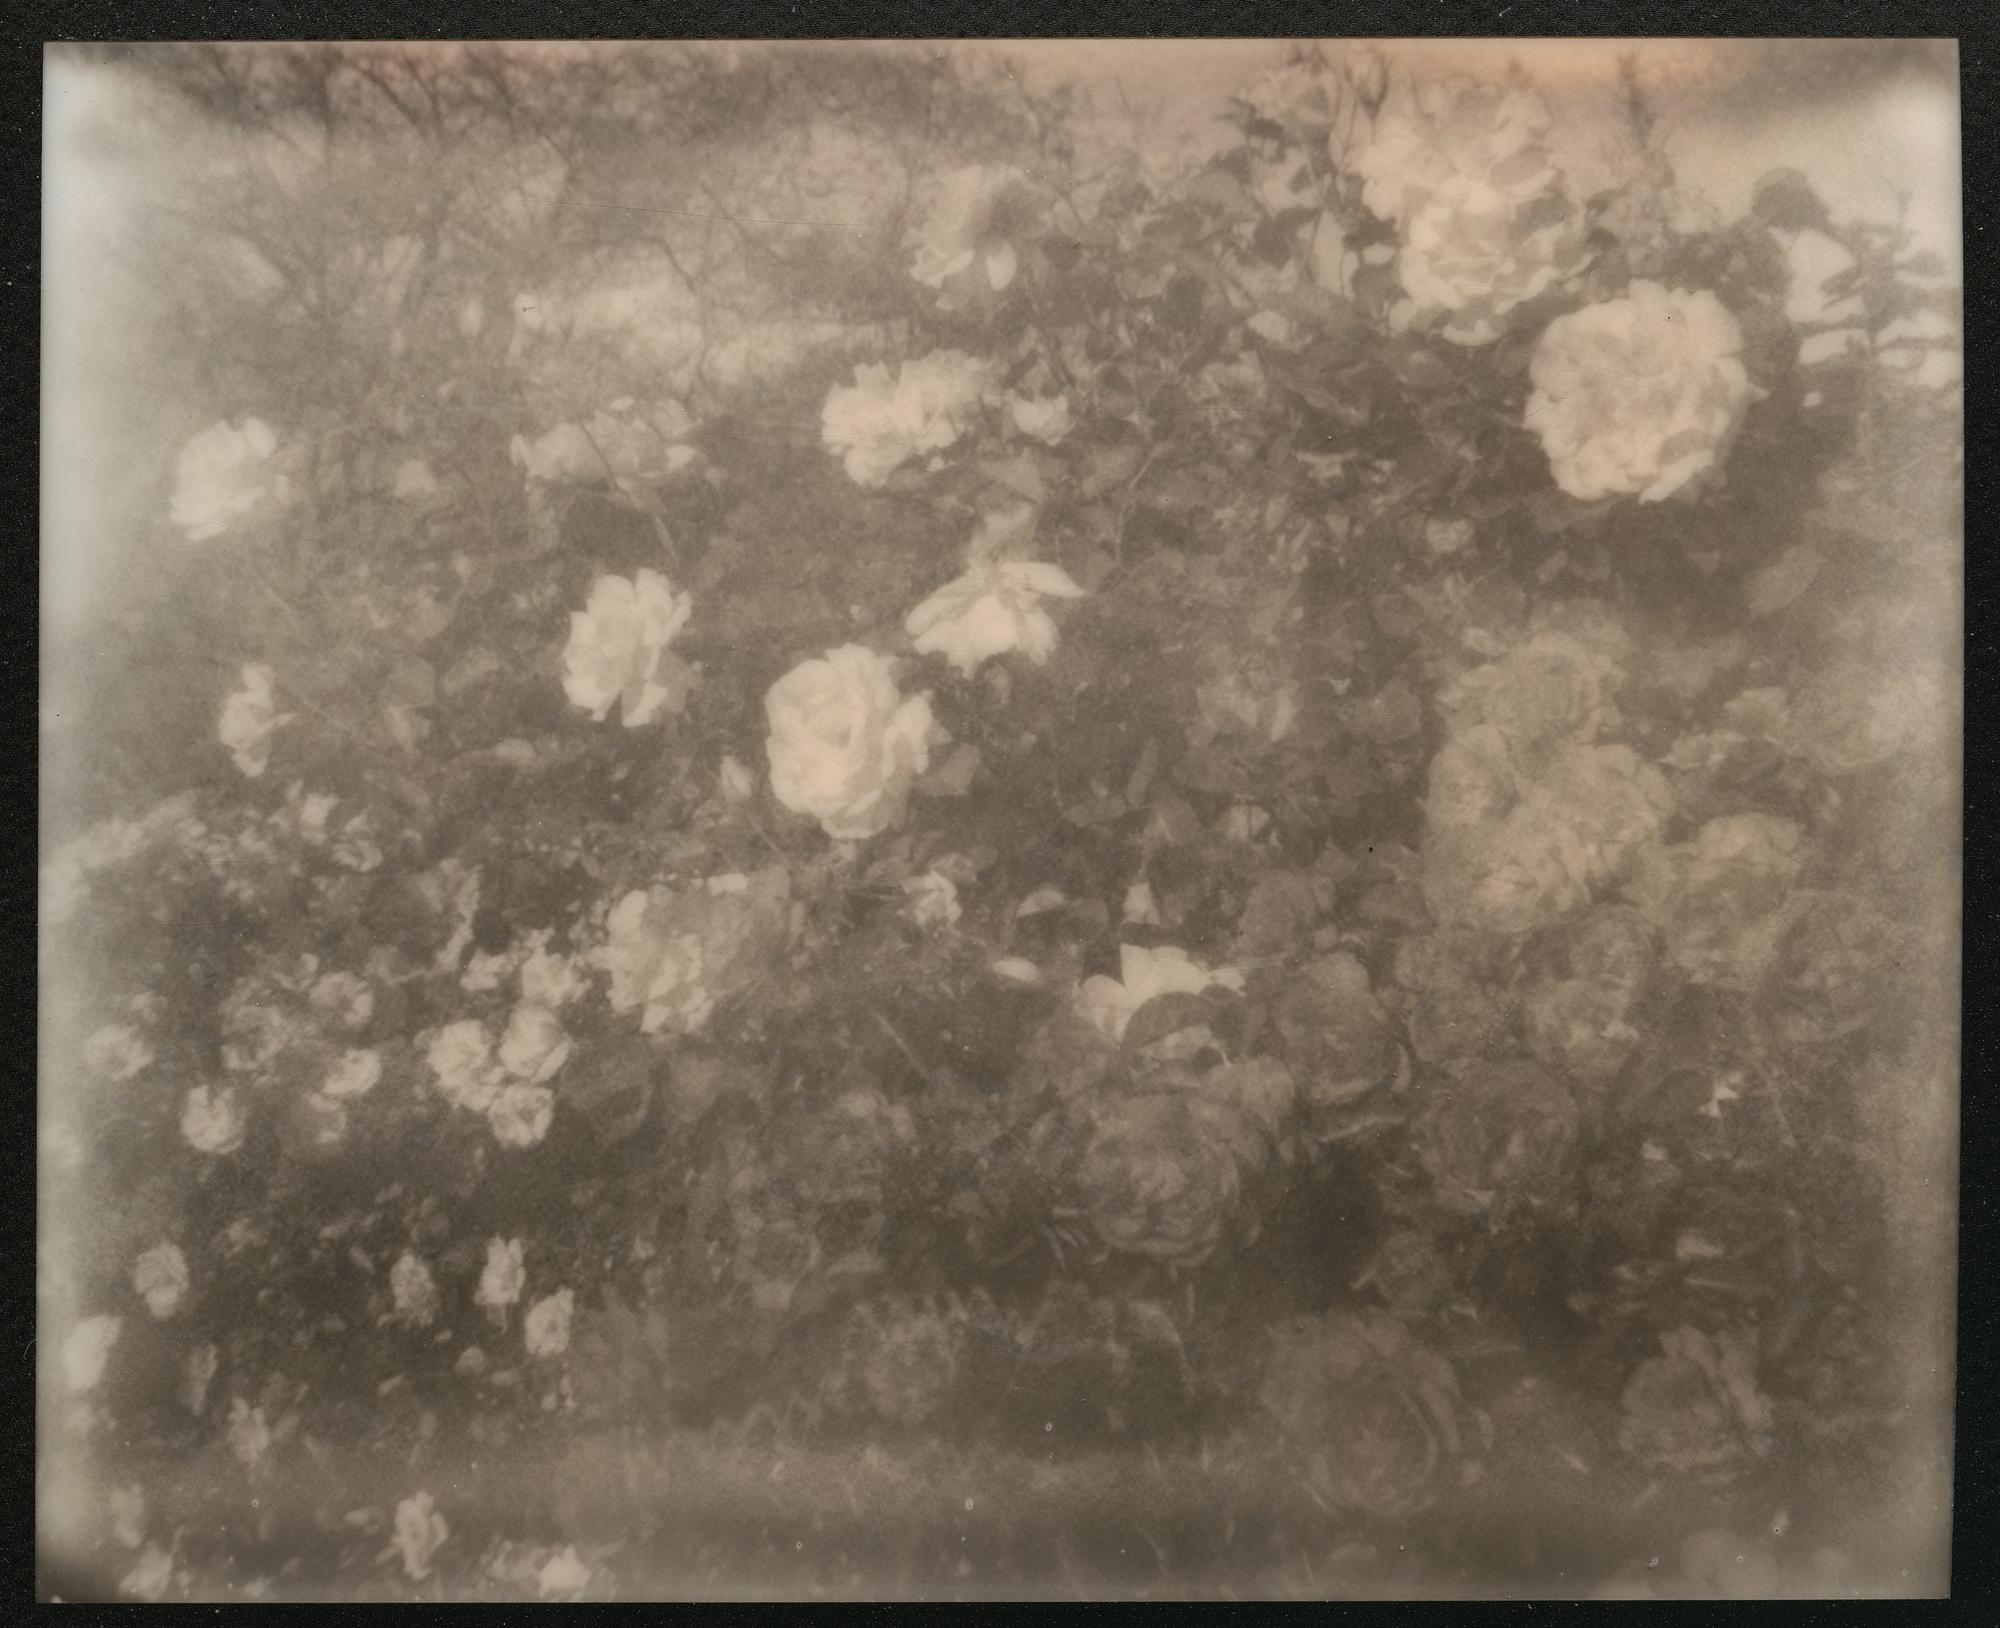 Stefanie Schneider Black and White Photograph - Desert Roses (California Dreaming) - Contemporary, 21st Century, Polaroid